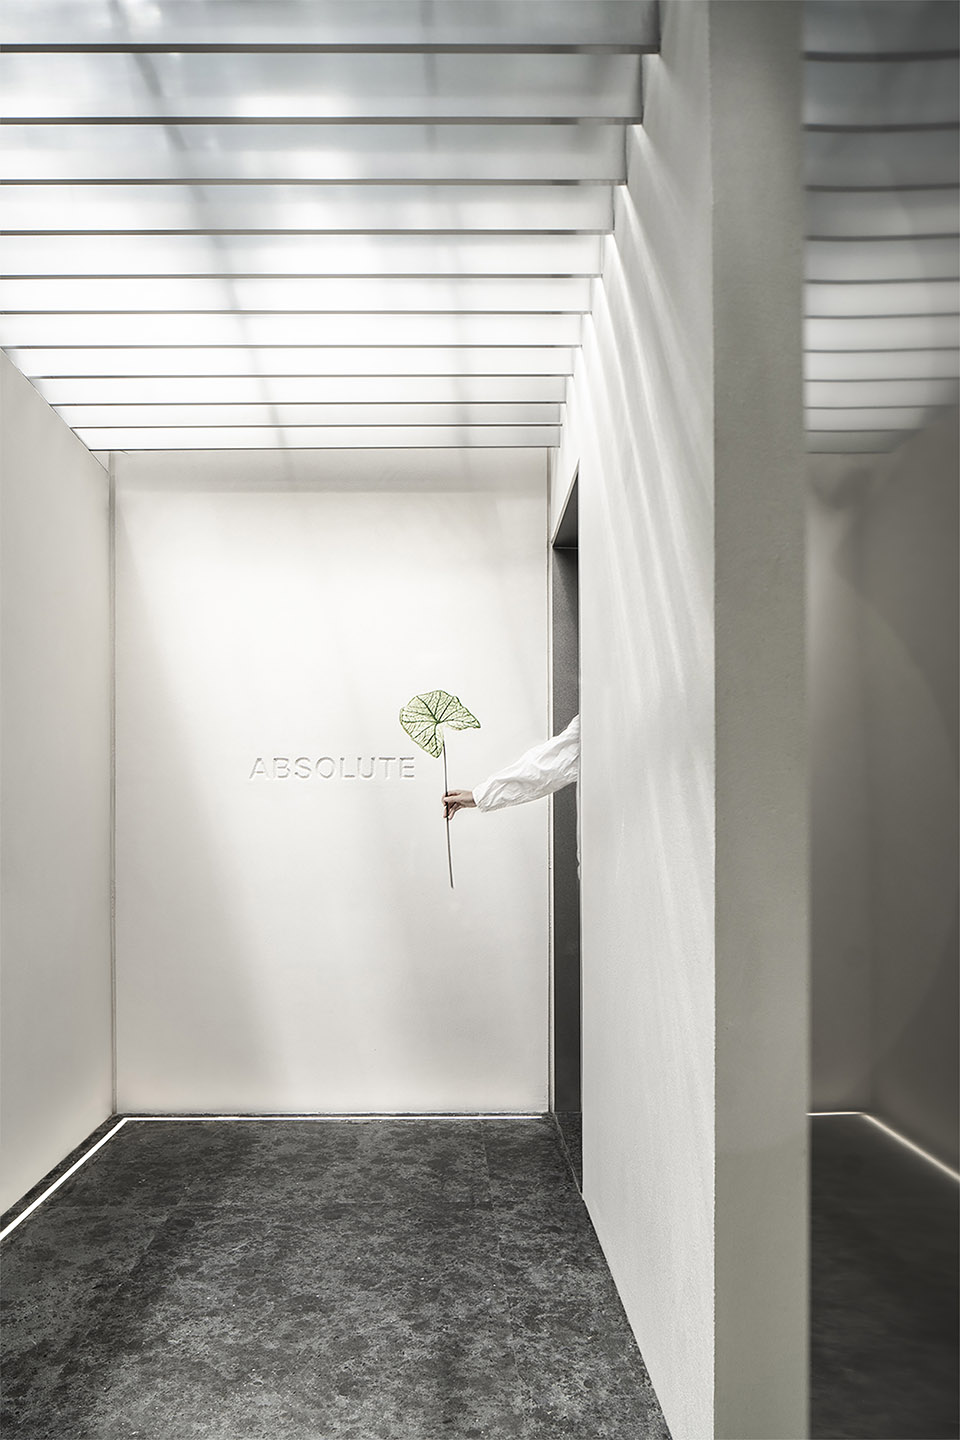 Absolute精品花艺店，上海/烘托花卉艺术的简约纯净空间-63